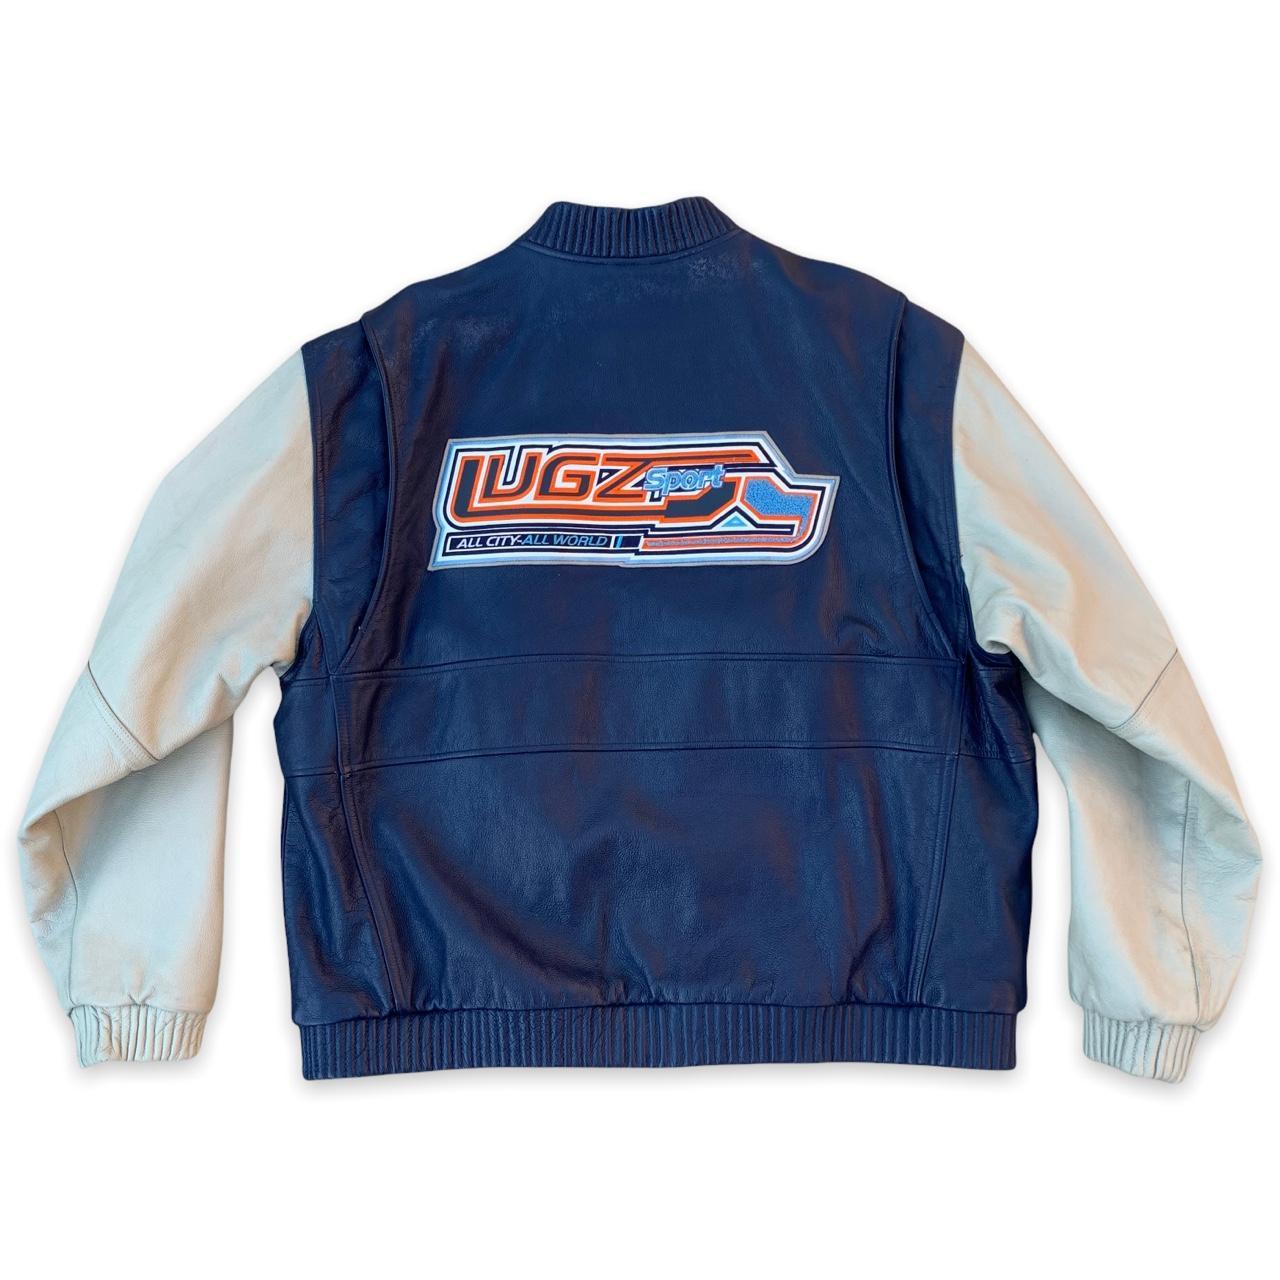 Rare Vintage LUGZ SPORT Leather Jacket. LUGZ “Sports...